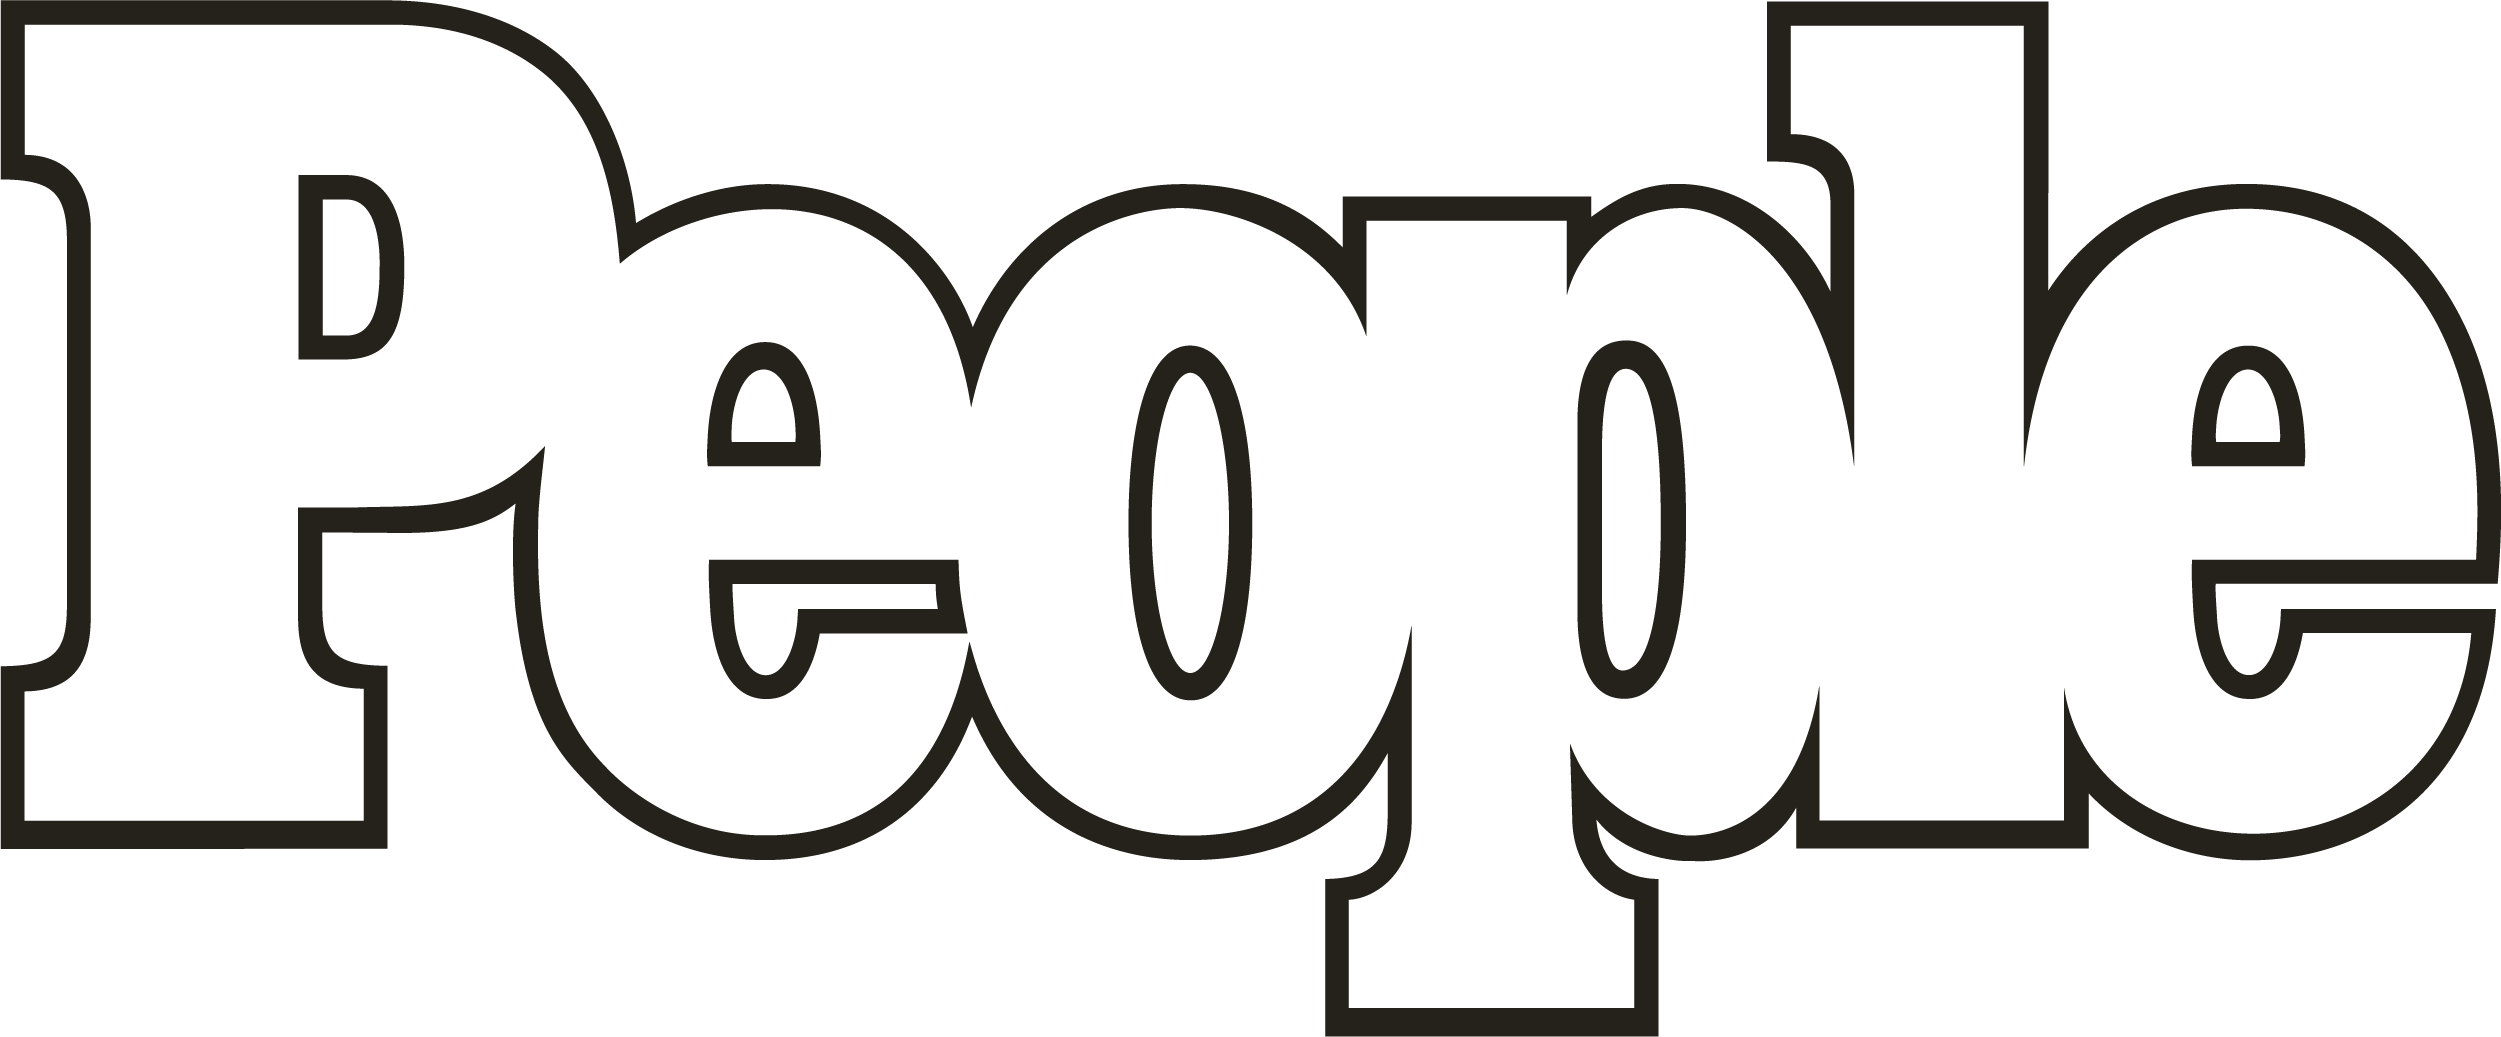 People brand logo